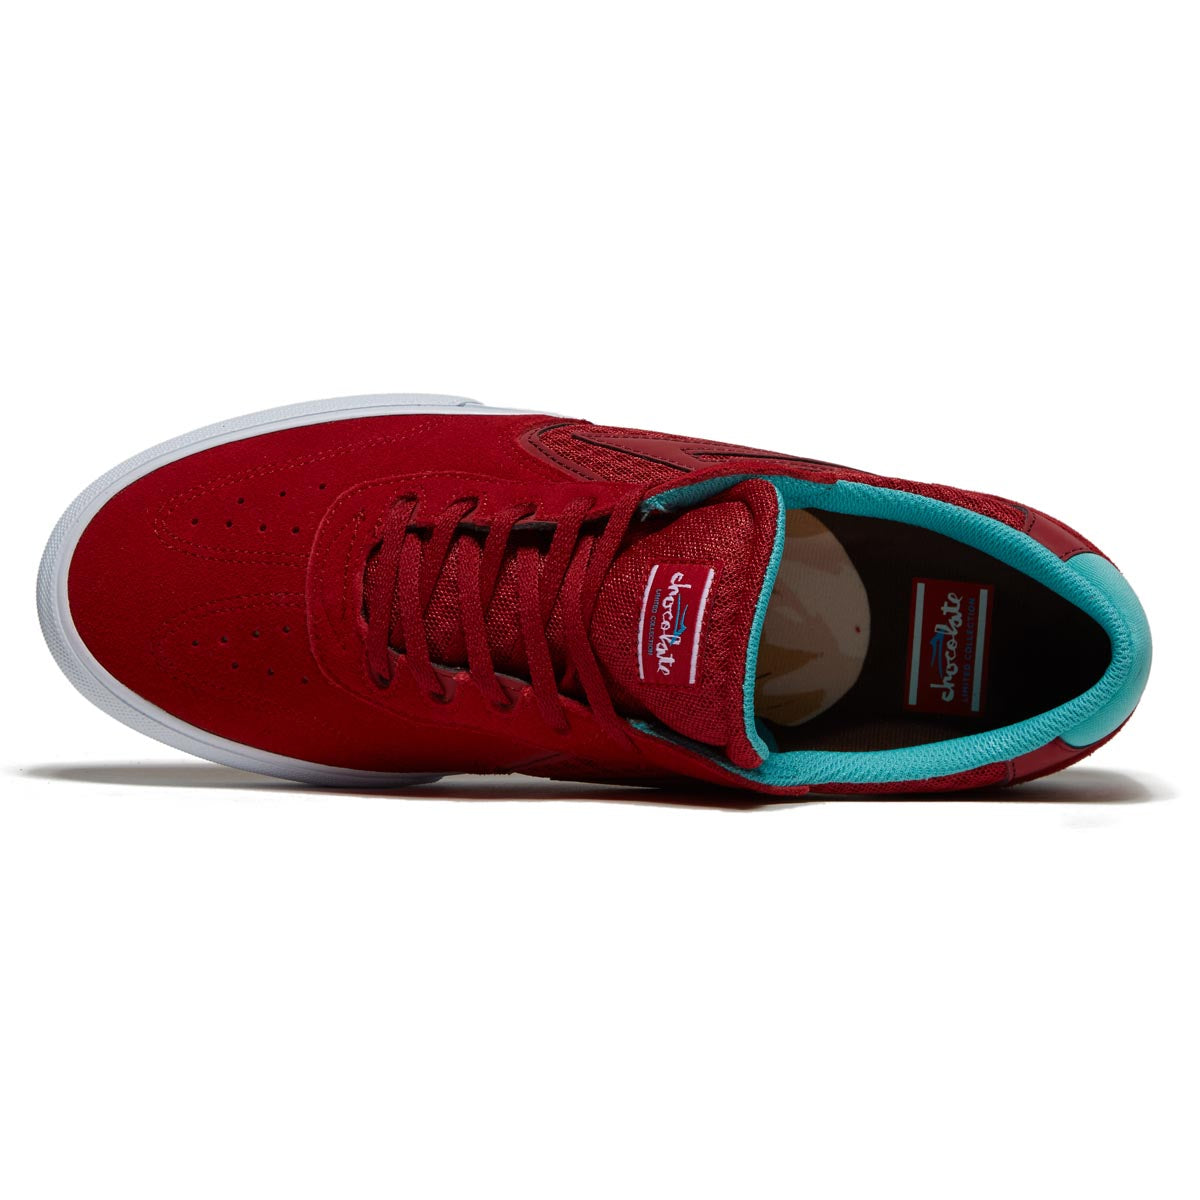 Lakai x Chocolate Atlantic Vulc Shoes - Red Suede image 3